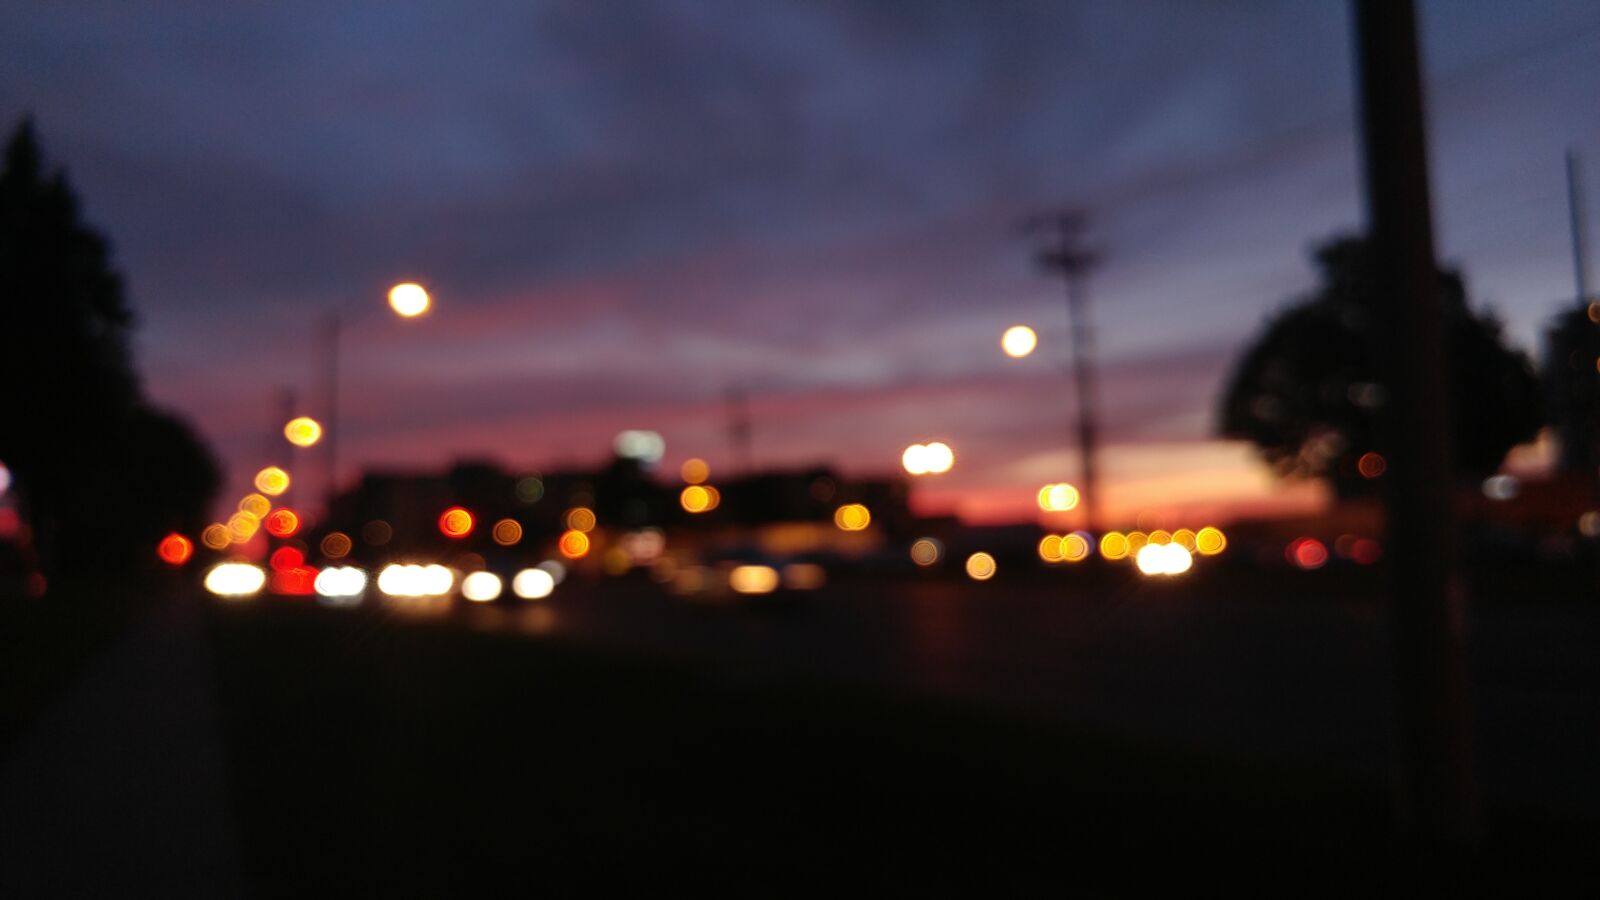 LG G5 sample photo. Blur, blurred, car, lights photography